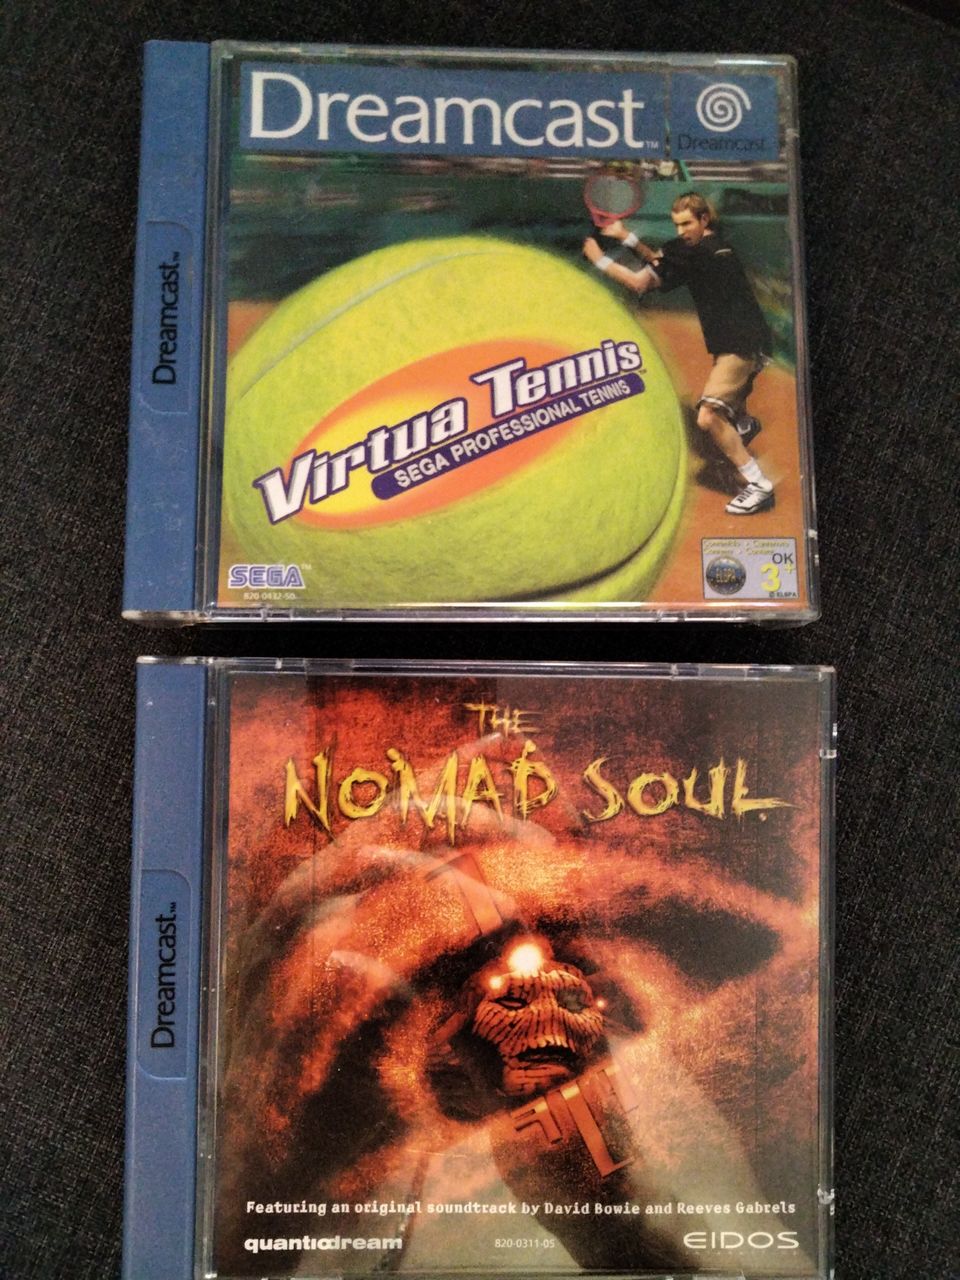 Sega Dreamcast pelit: Virtua Tennis ja The Nomad Soul